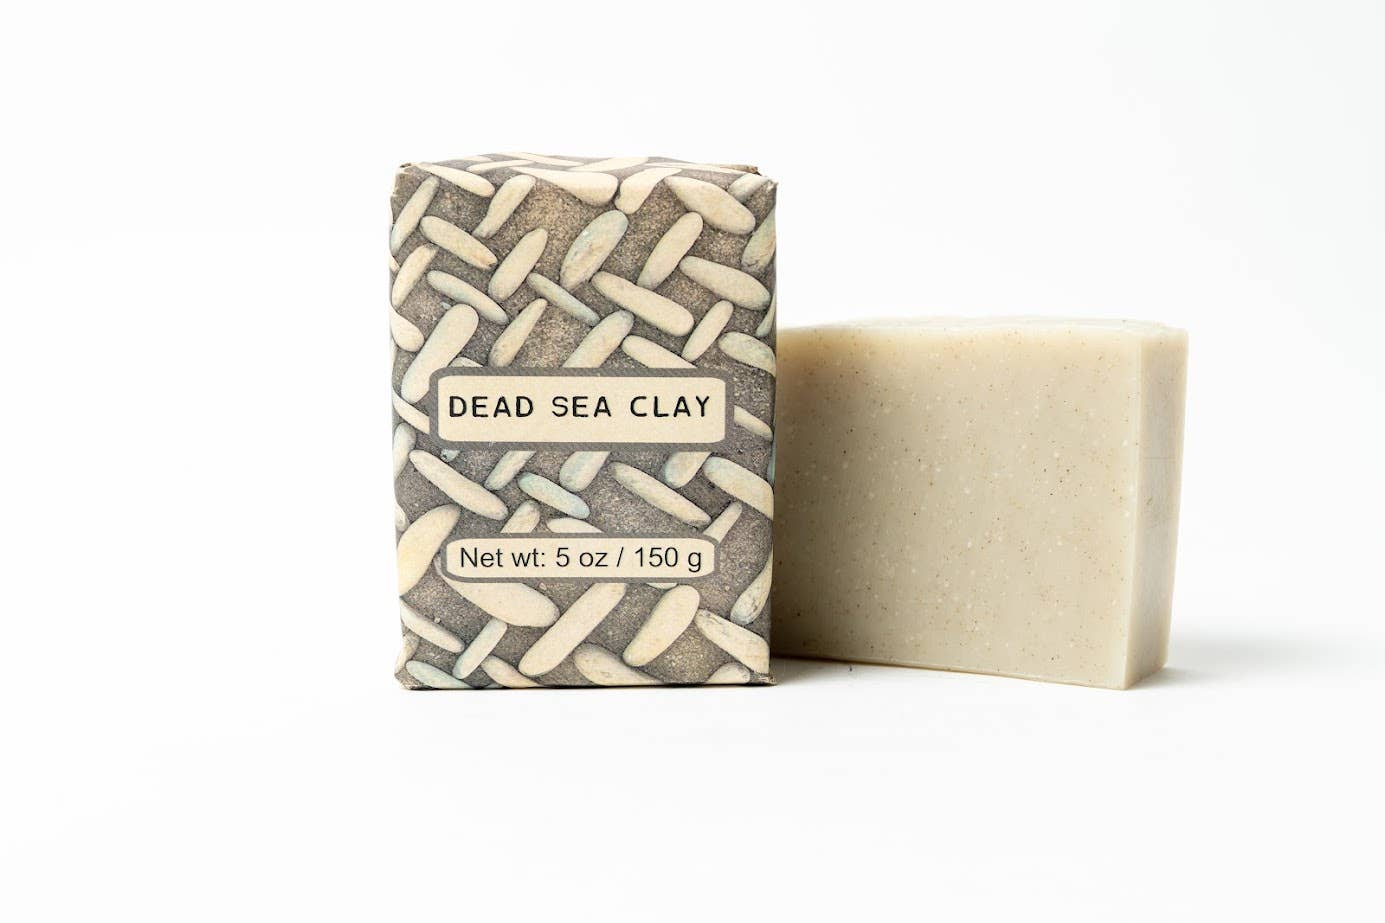 Fredericksburg Essentials - Dead Sea Clay Frankincense and Cedarwood Natural Soap Bar